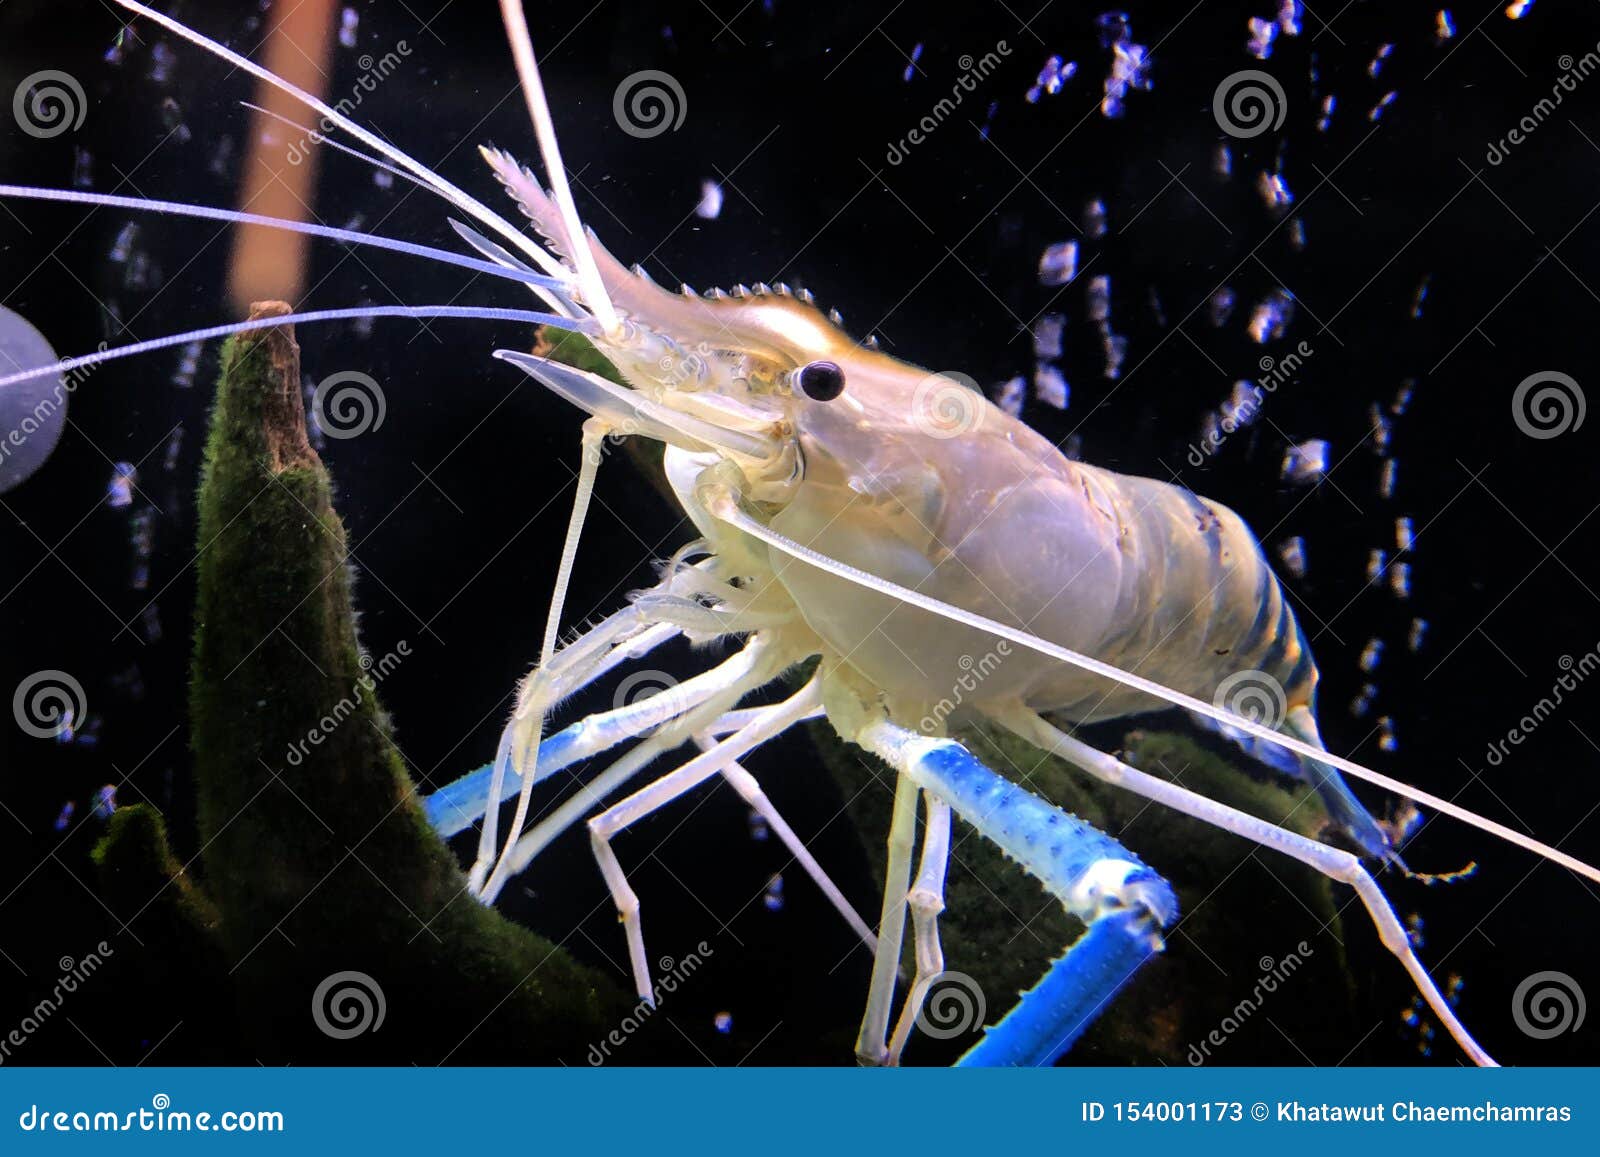 Giant Freshwater Prawn or Giant River Shrimp in Tank Stock Image - Image of  freshness, crustacean: 154001173